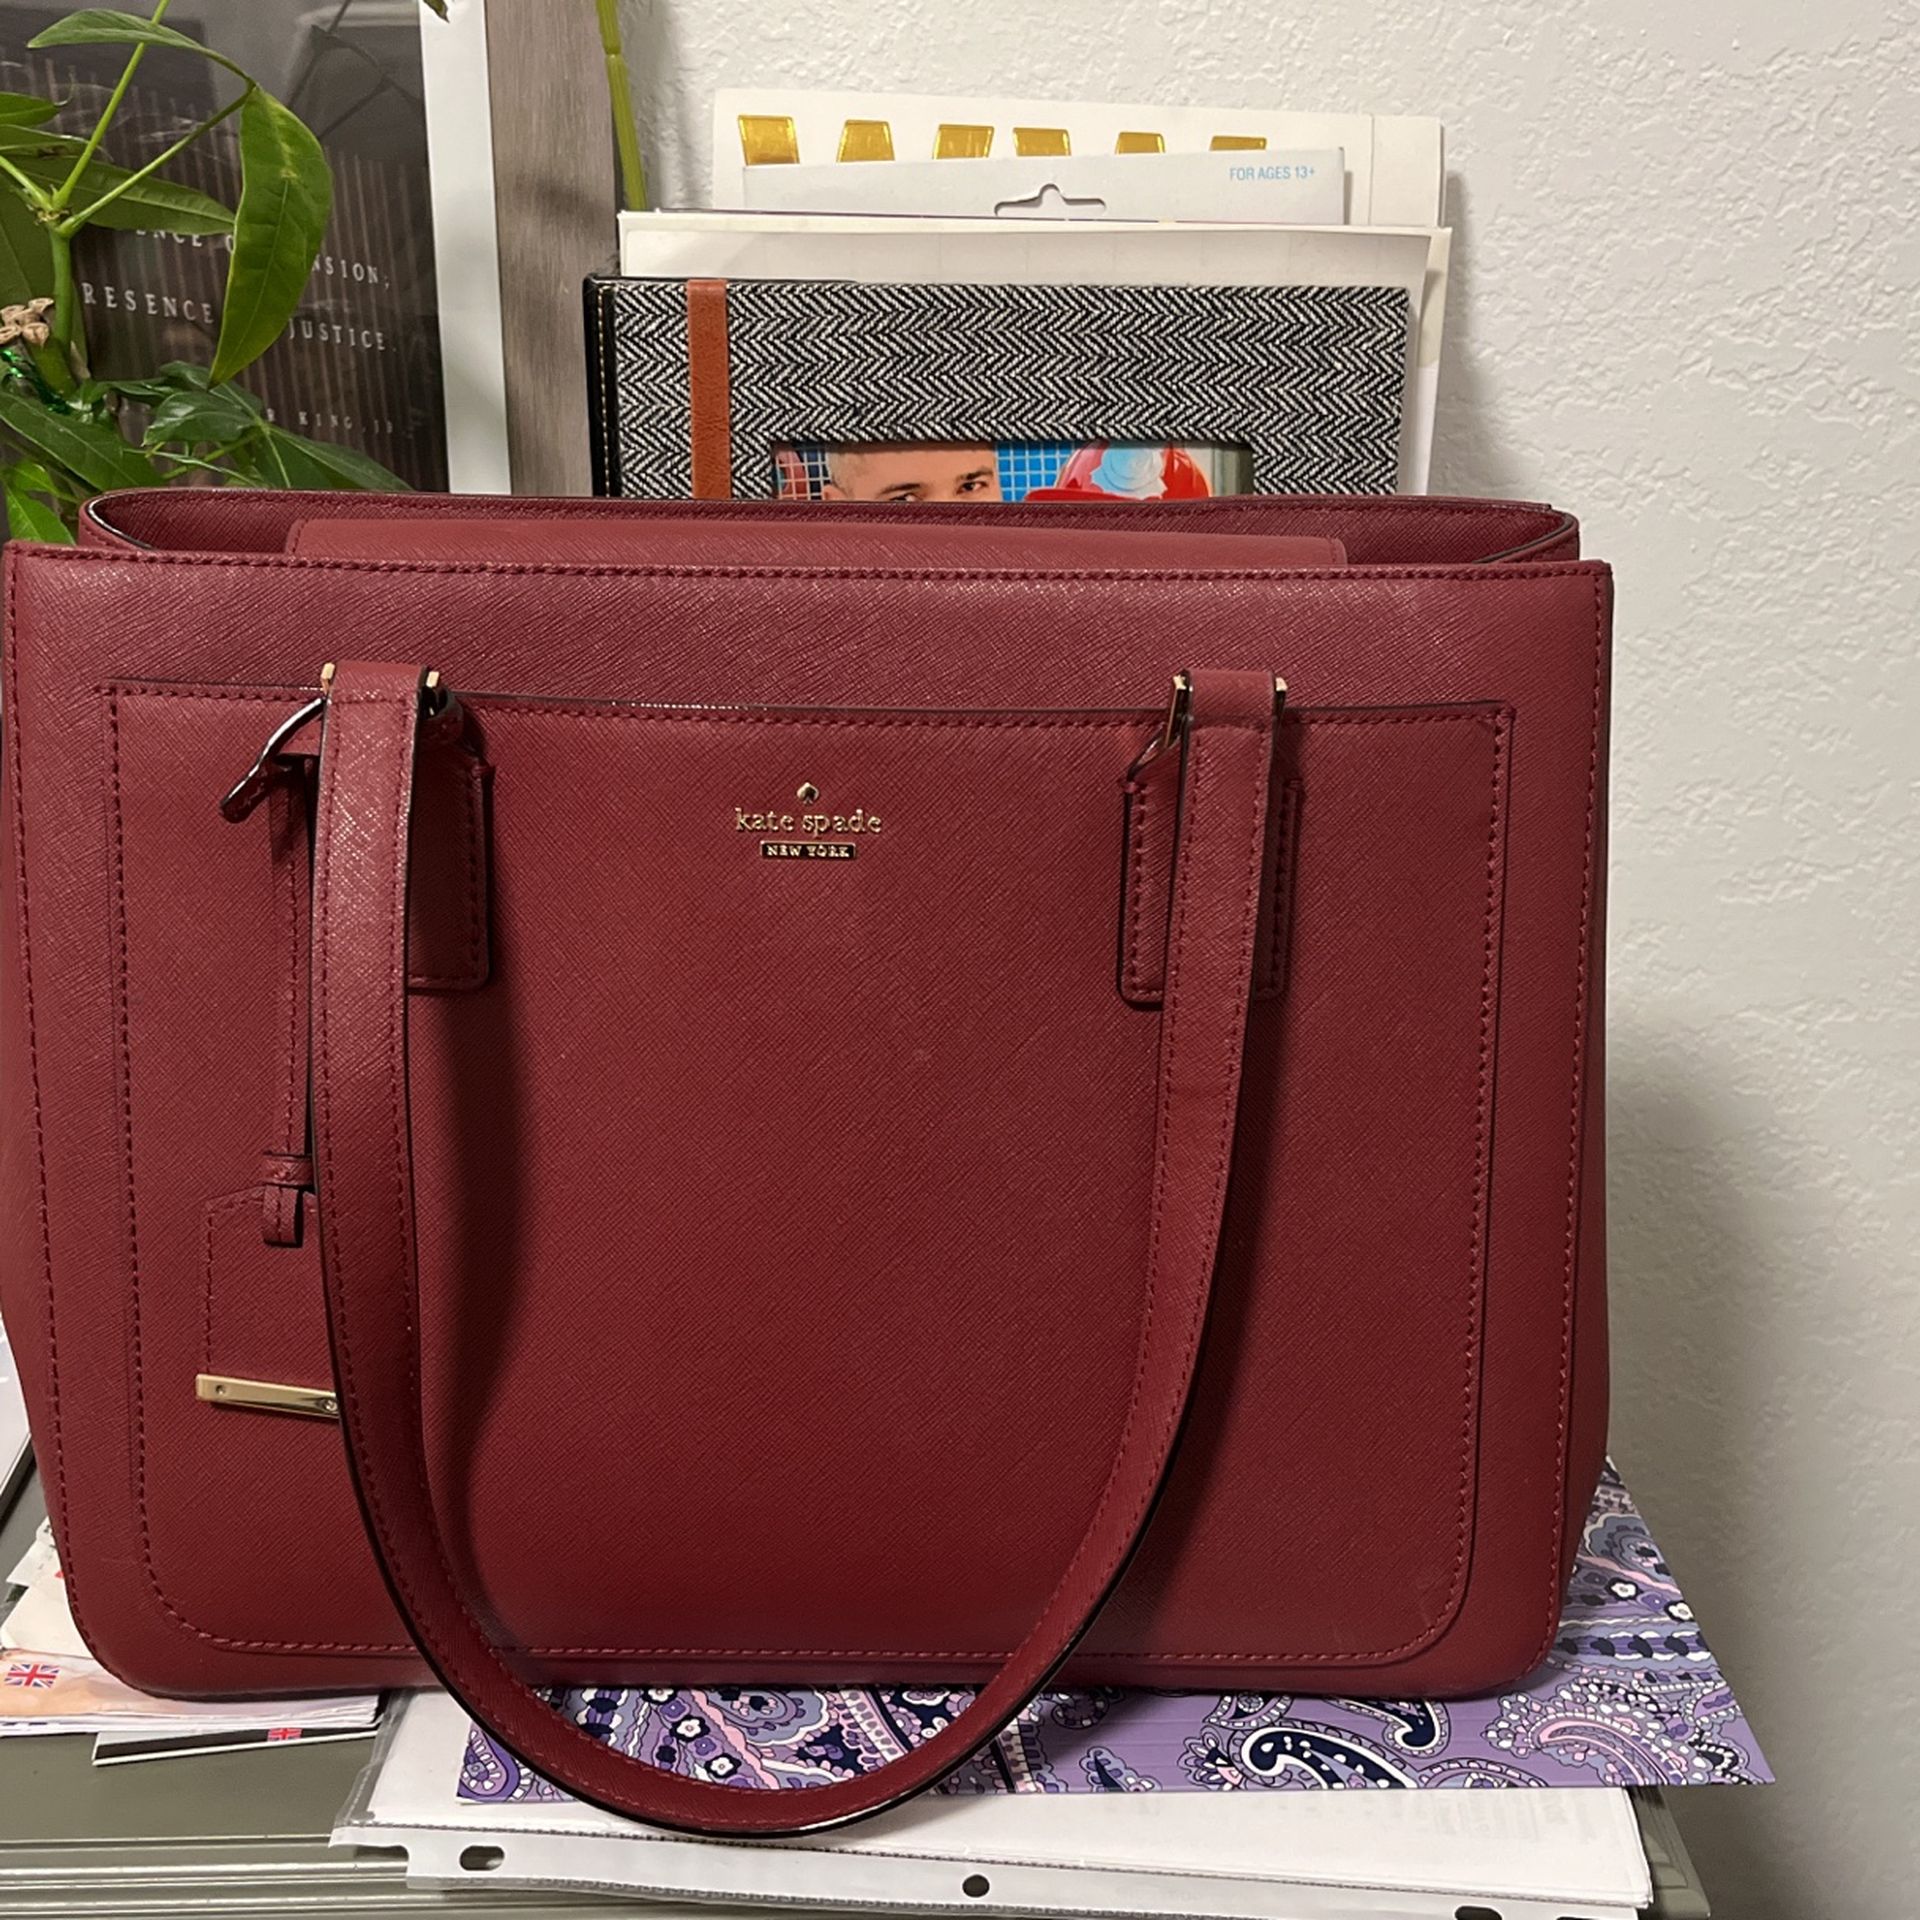 Red Kate Spade Handbag